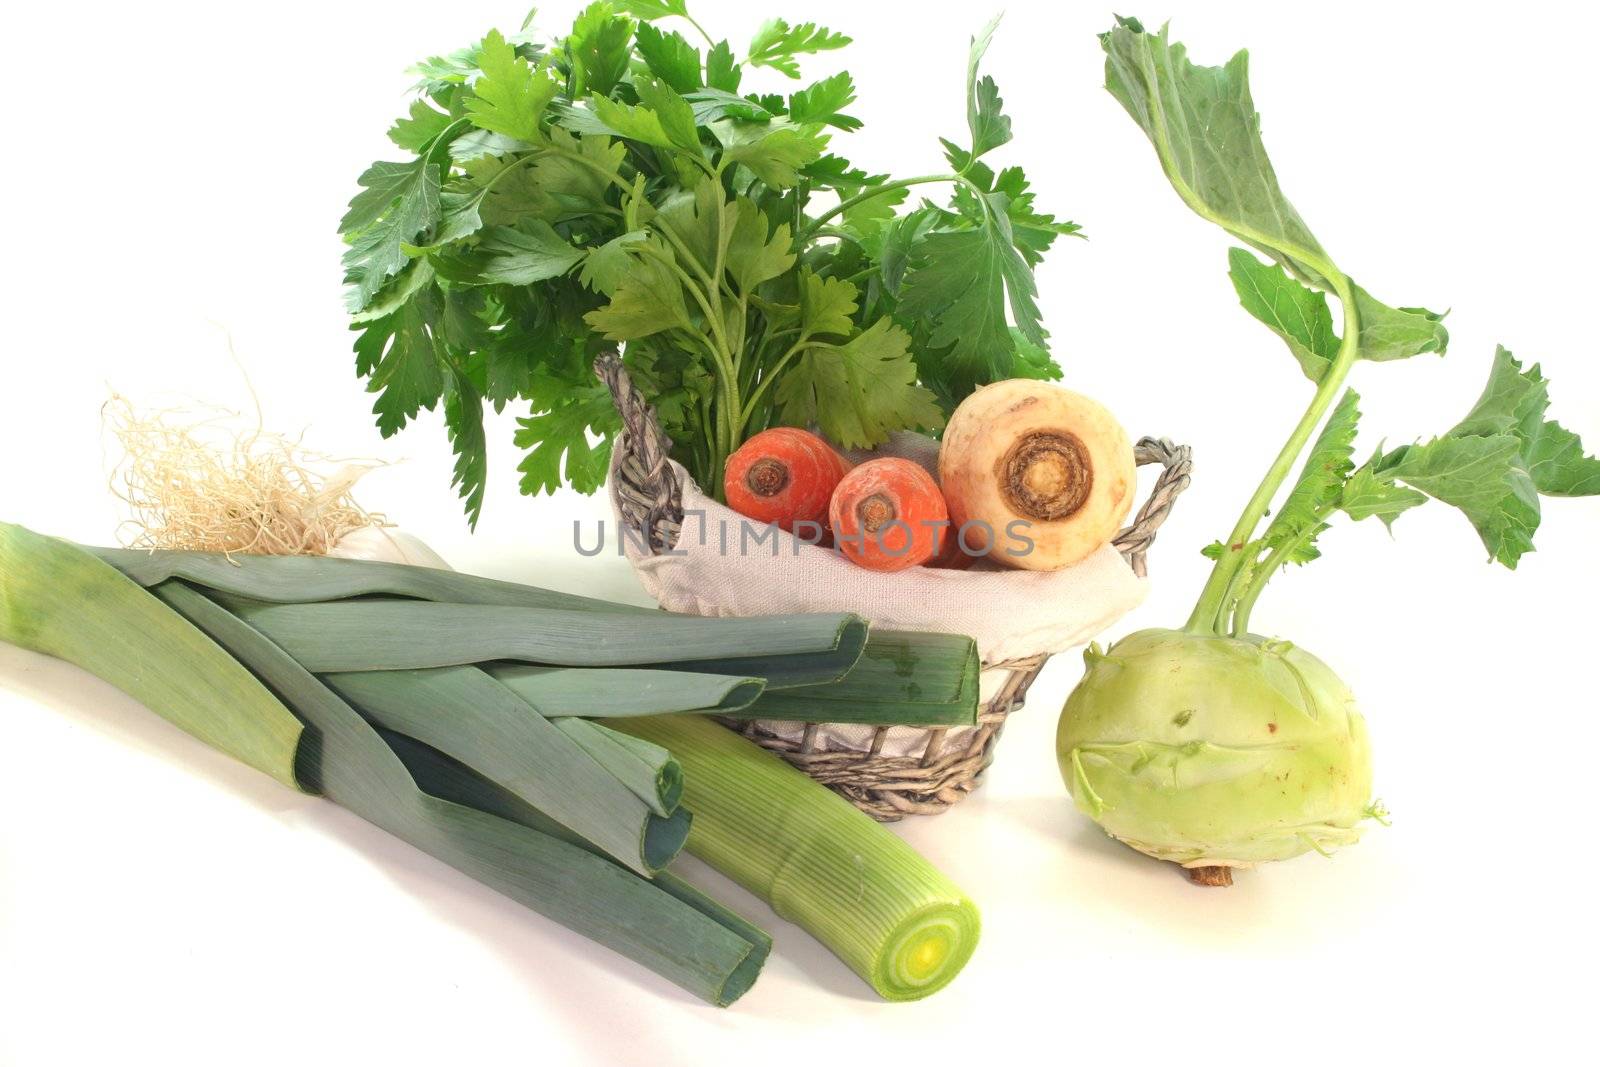 Greens with kohlrabi, carrots, leek, parsley and parsley root in the basket